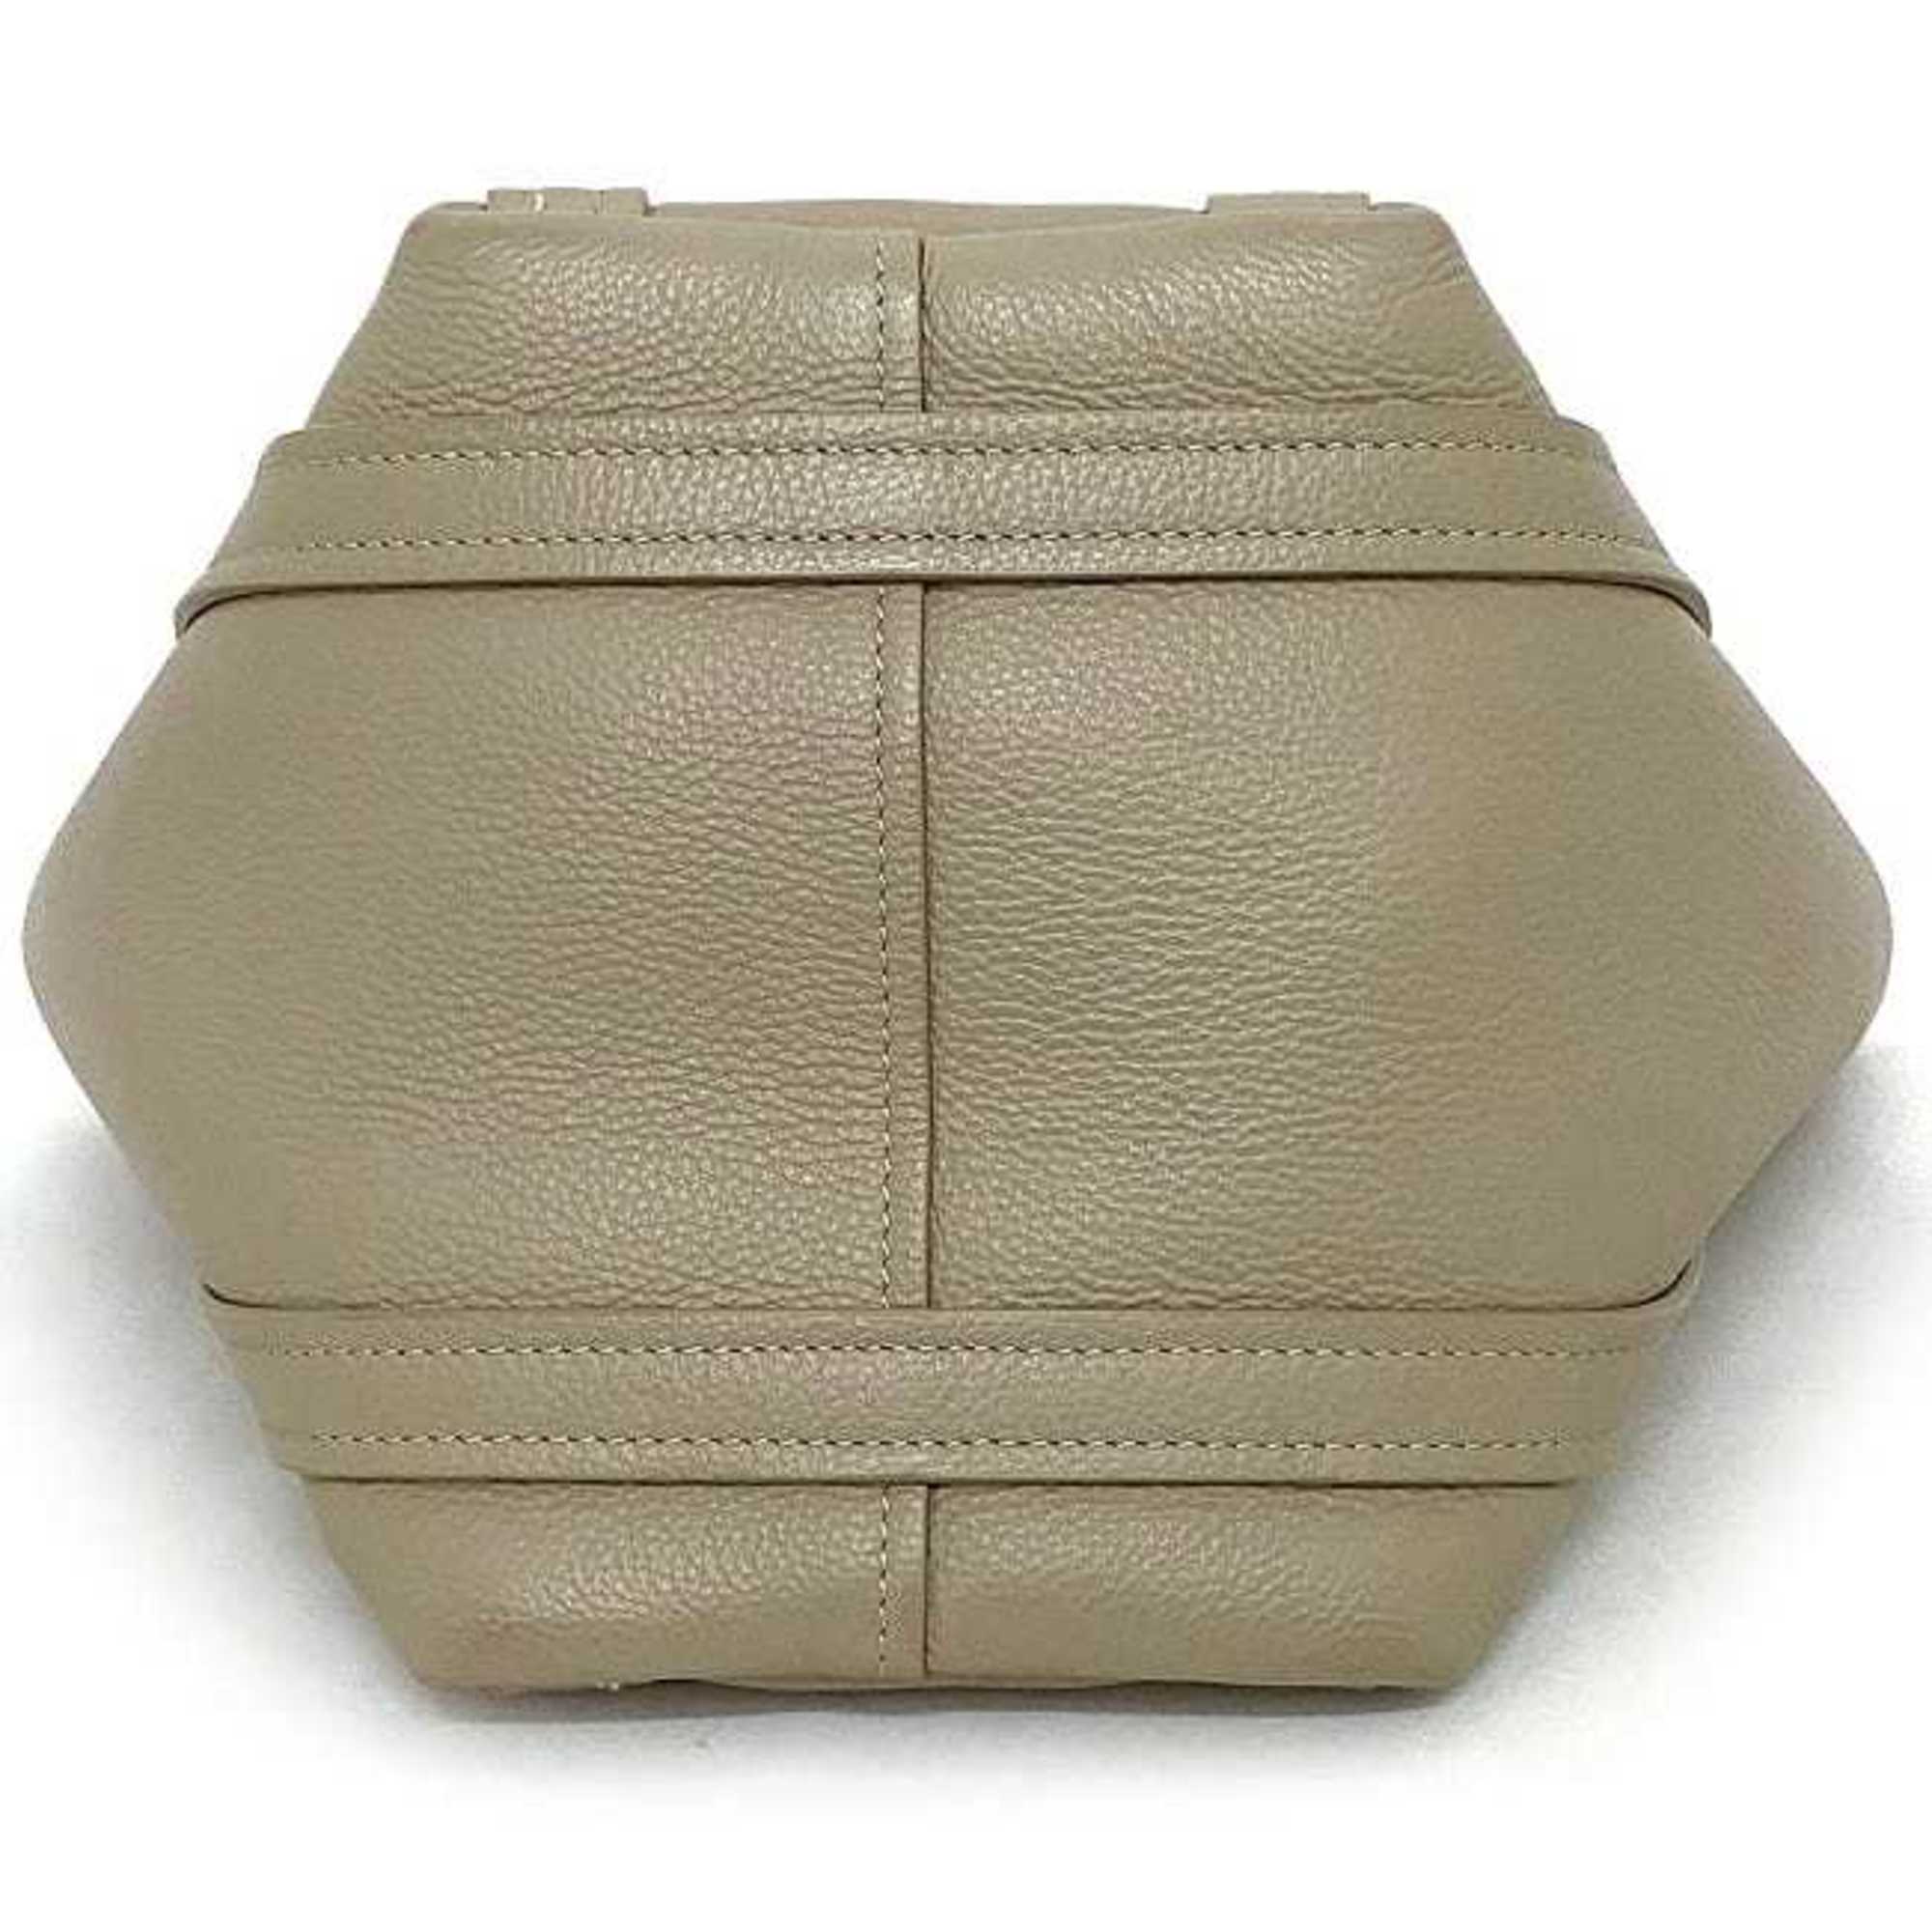 Balenciaga 2way Tote XS Beige Silver Everyday 672793 Leather BALENCIAGA North South Handbag Shoulder Bag